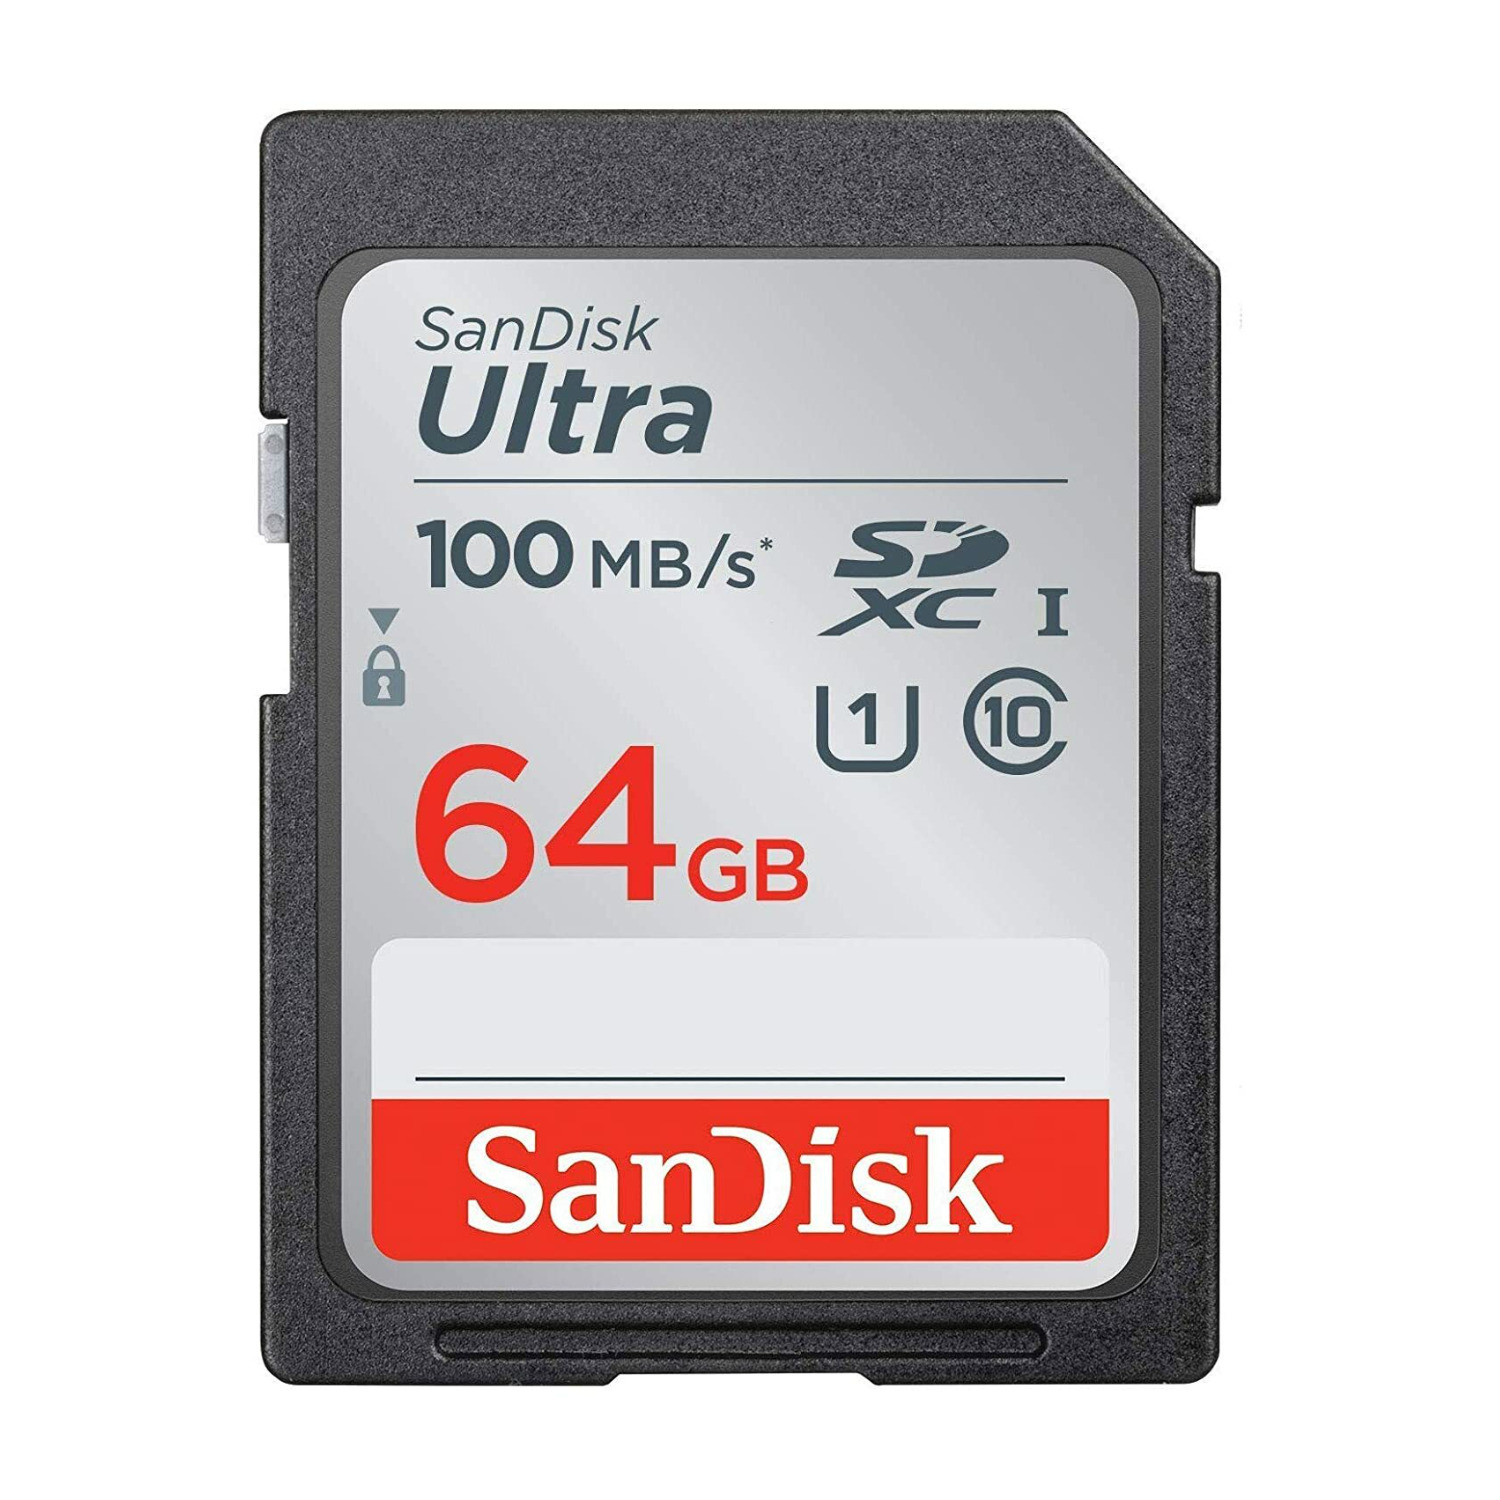 SanDisk 64GB Ultra SDXC UHS-I Memory Card in Black/Silver